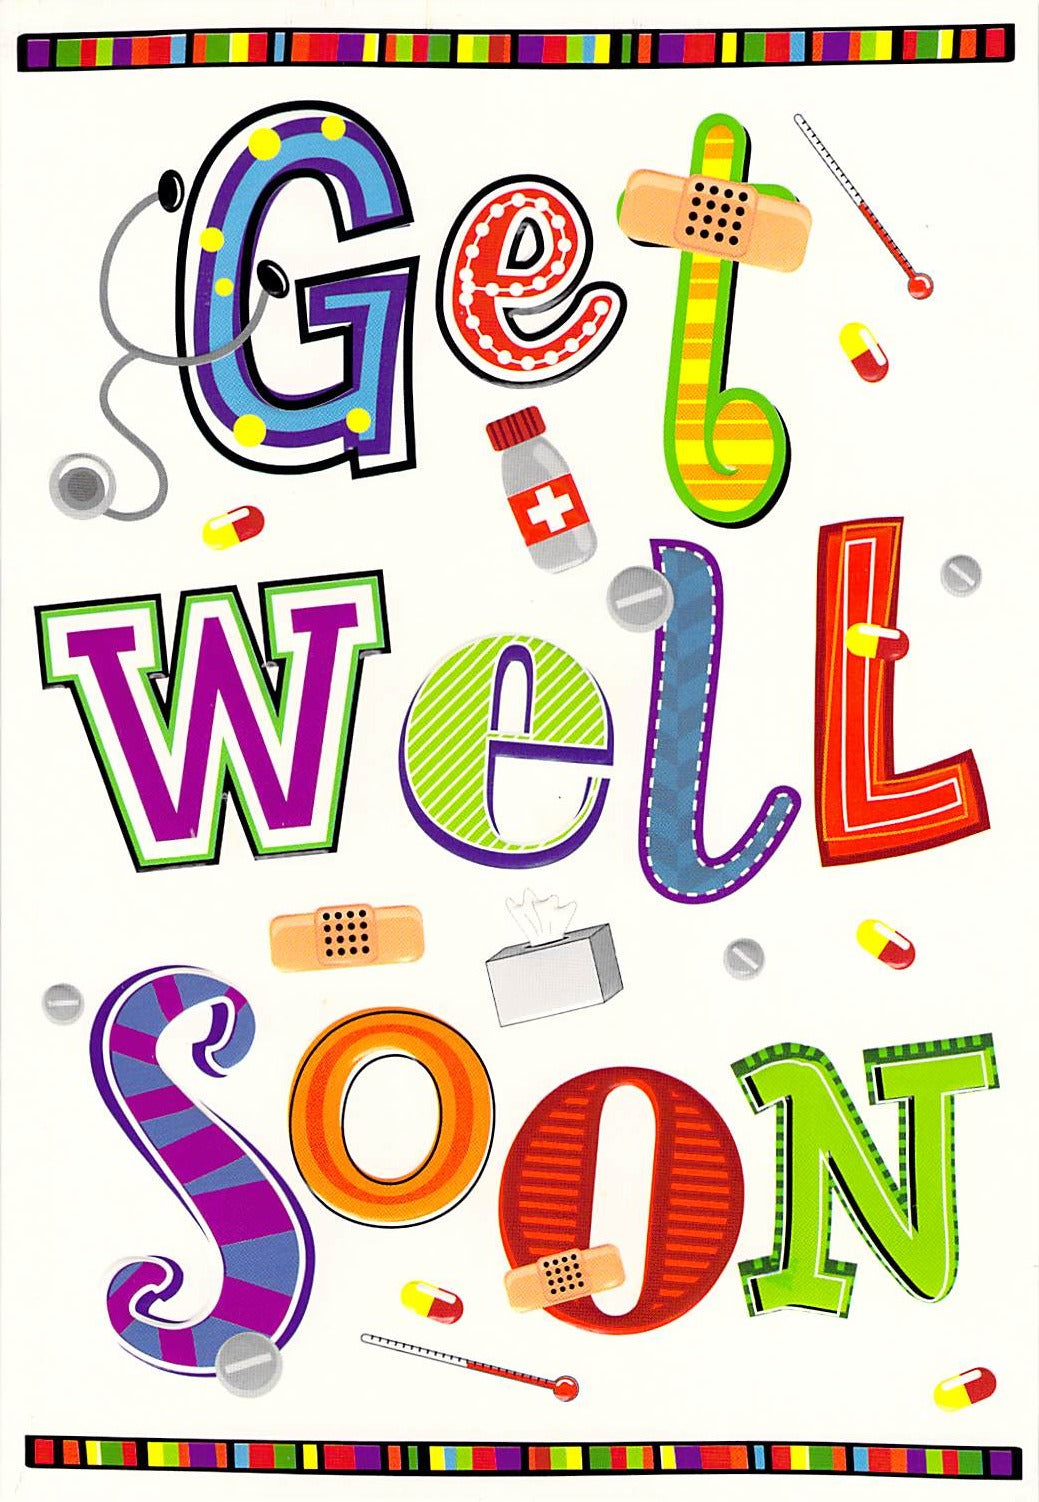 Get Well Soon - Medical Cartoon Theme - Greeting Card - Multi Buy Discount